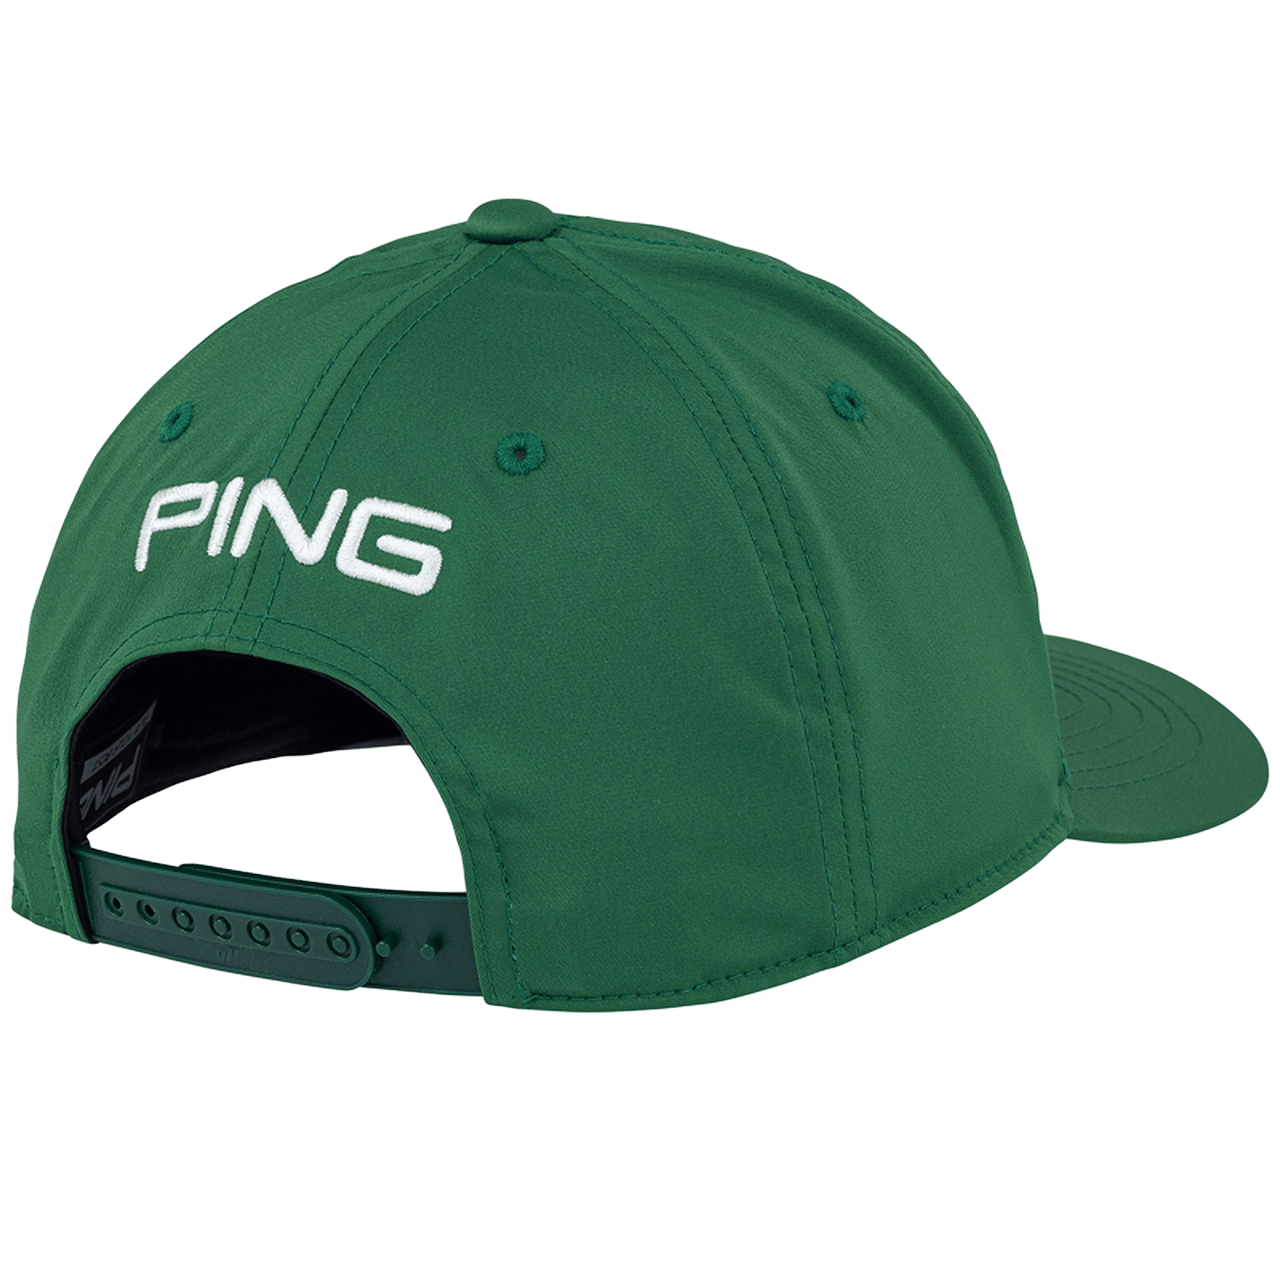 Ping Heritage Snapback Hat